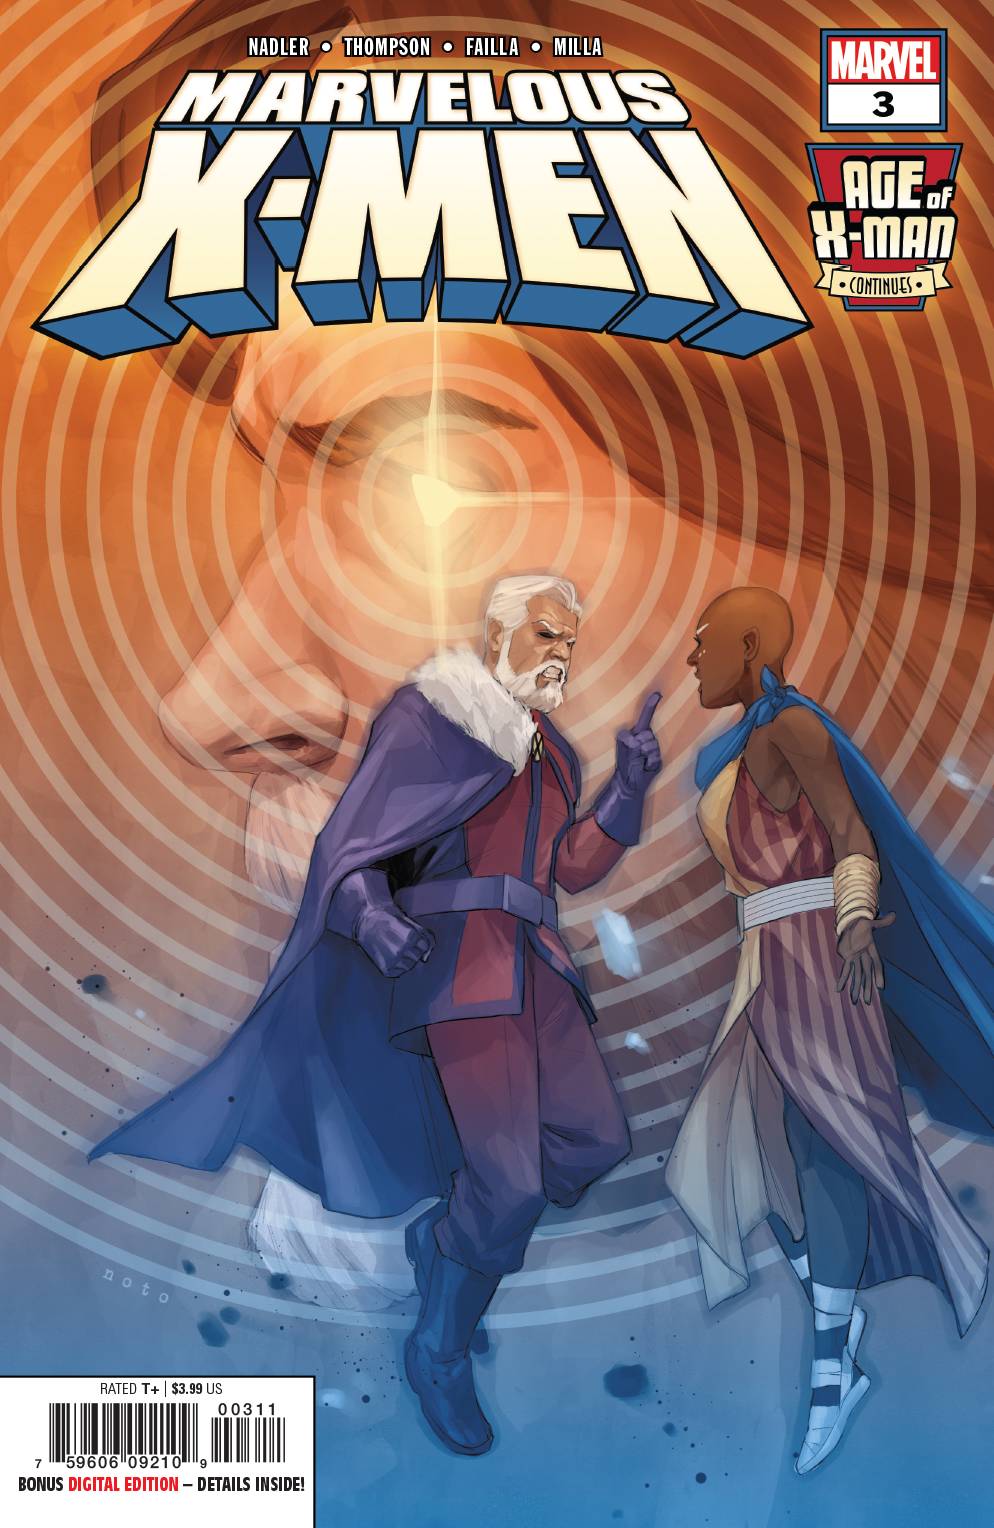 AGE OF X-MAN MARVELOUS X-MEN #3 (OF 5) 04/10/19